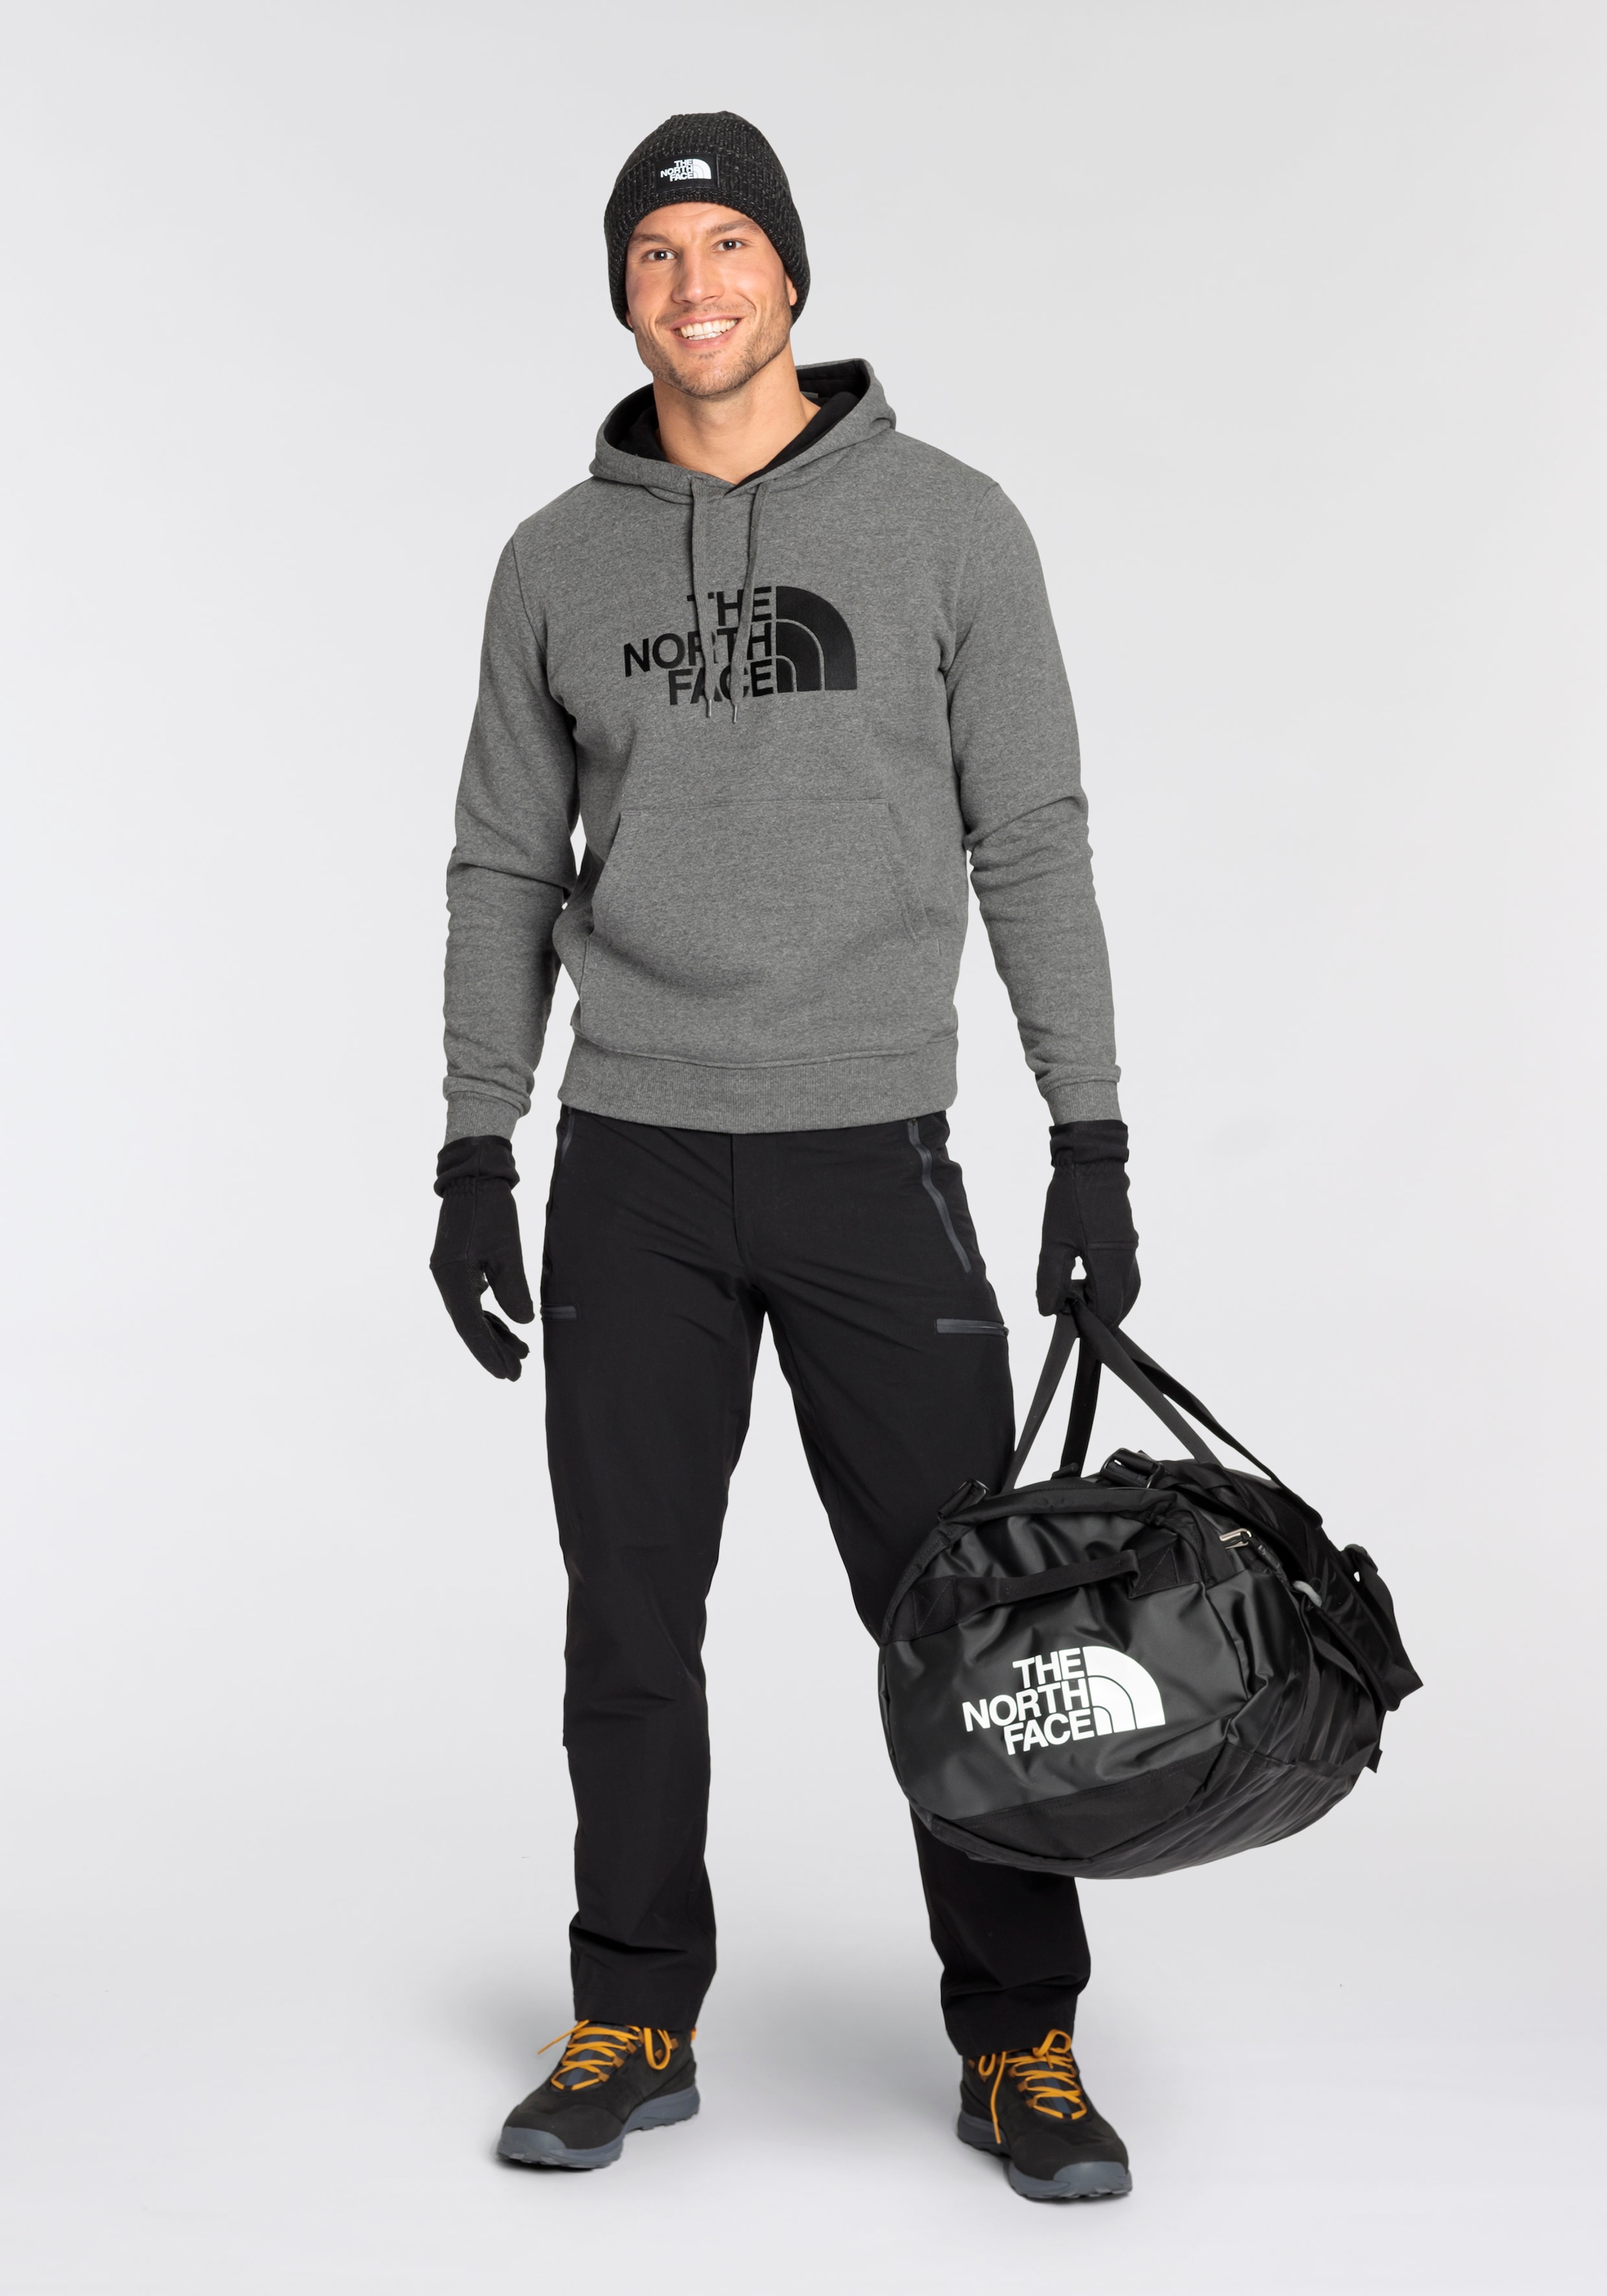 The North Face Kapuzenpullover »DREW shoppen bei PEAK« OTTO online